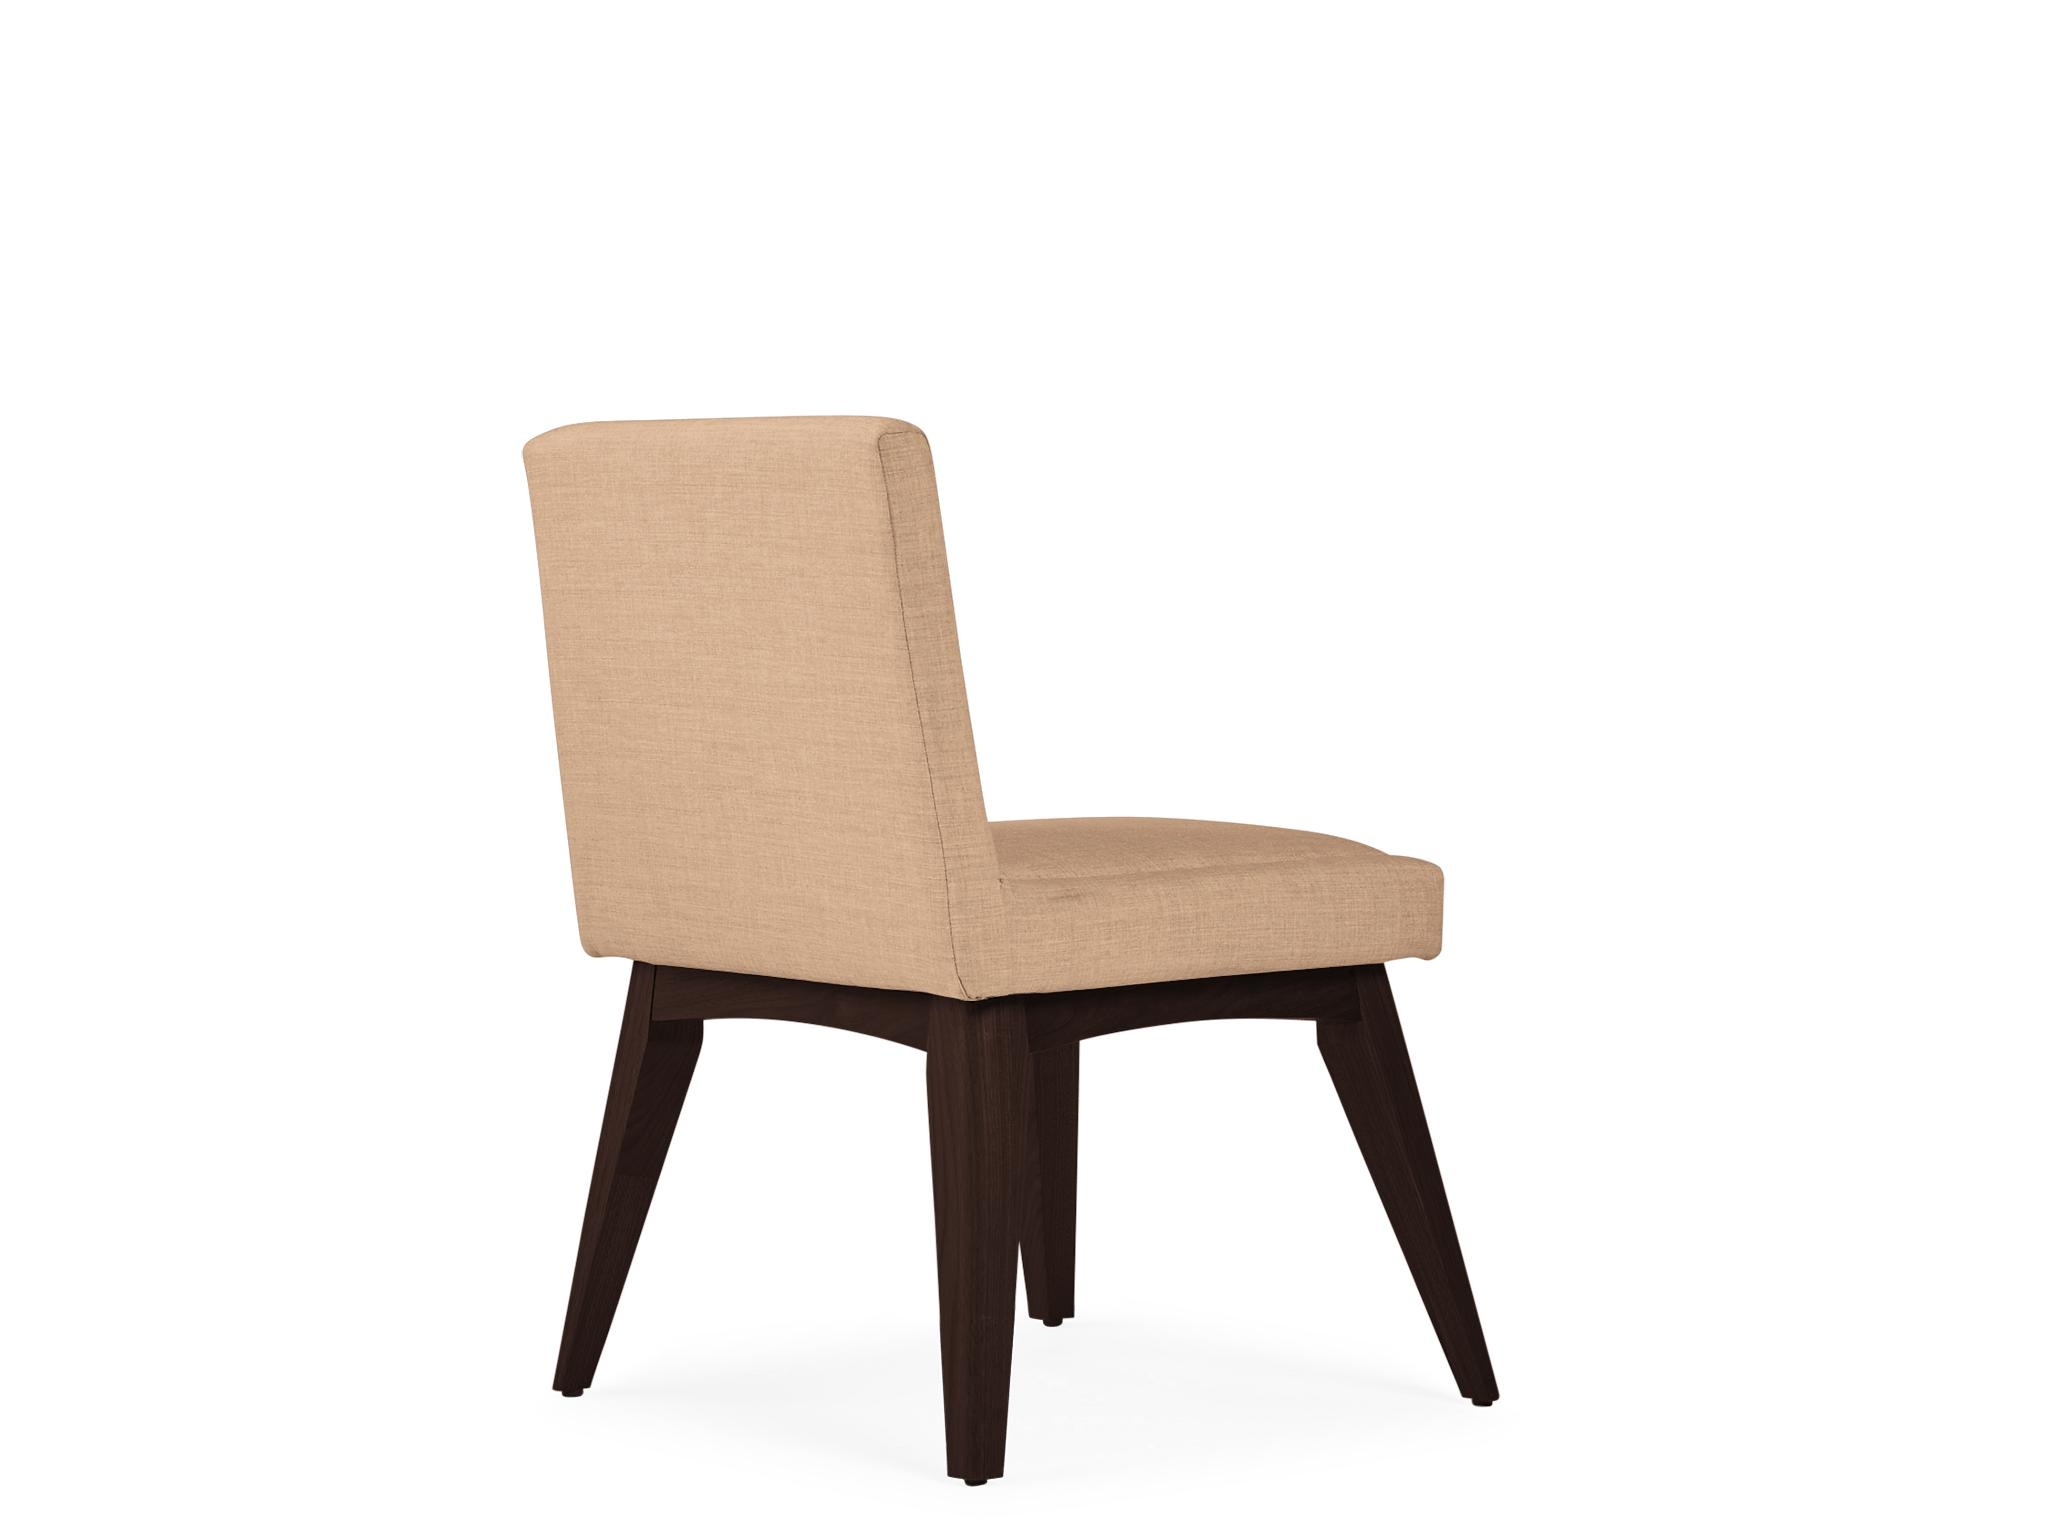 Pink Spencer Mid Century Modern Dining Chair - Royale Blush - Walnut - Image 3